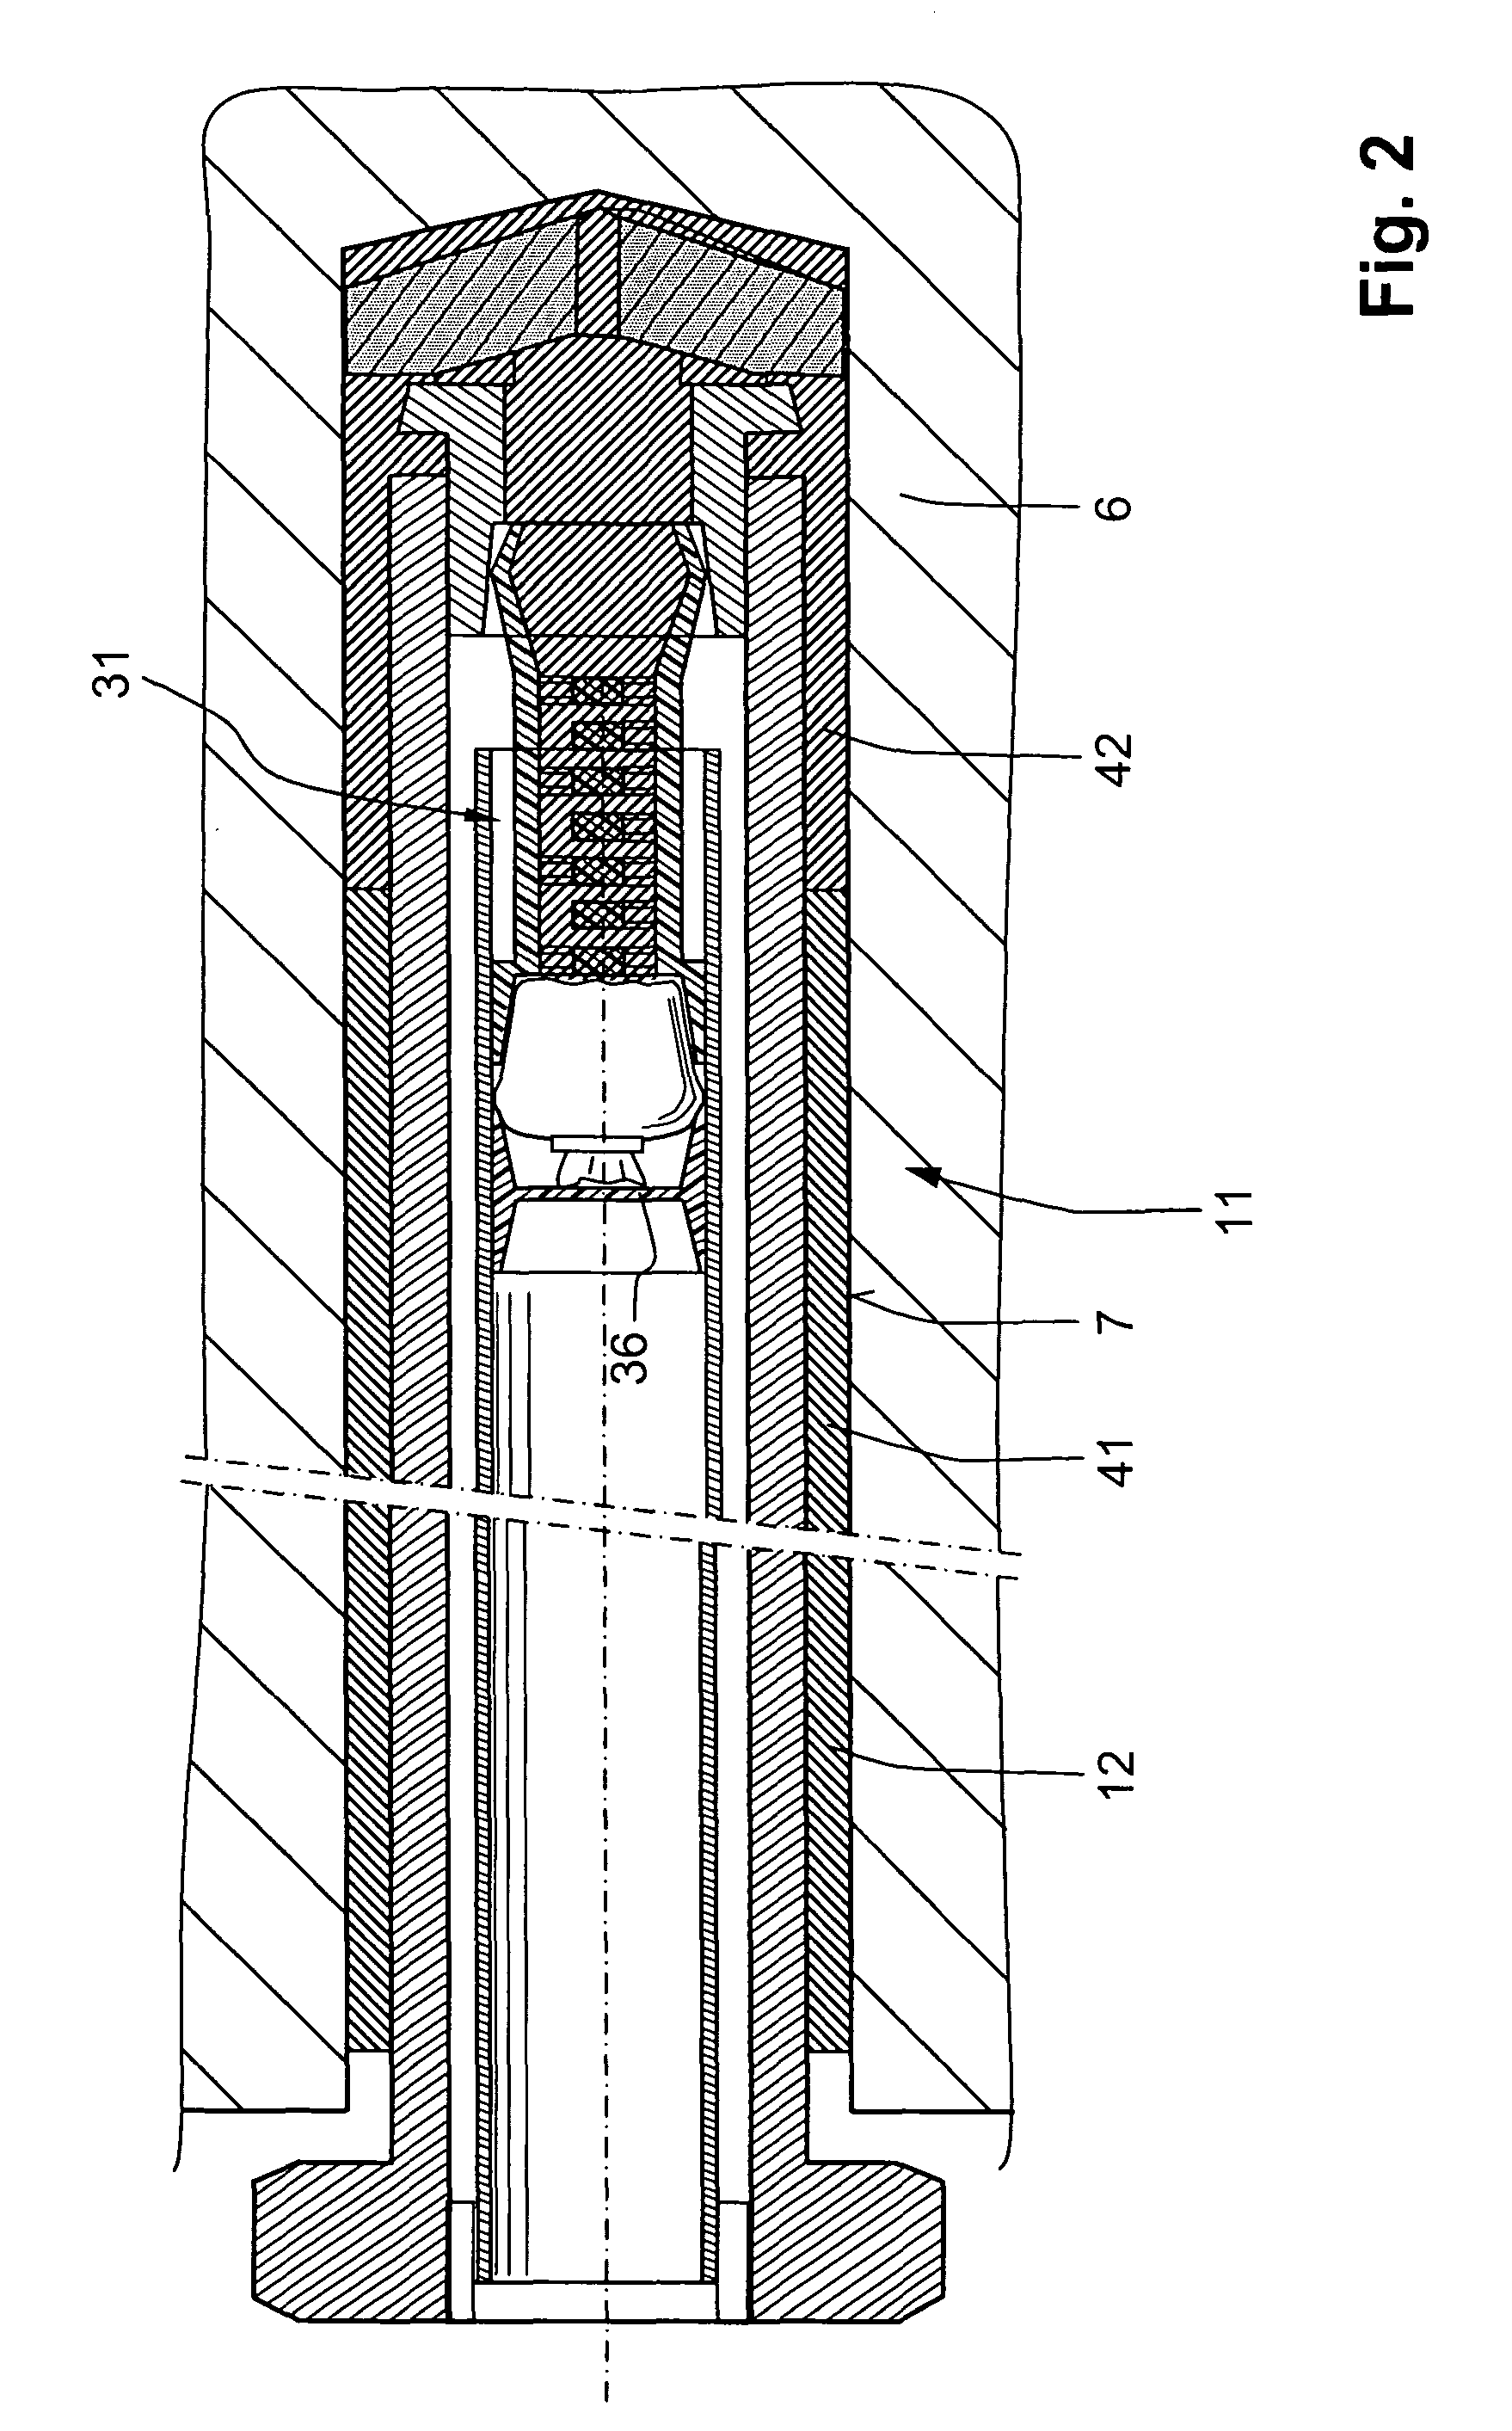 Self-drilling fastening element